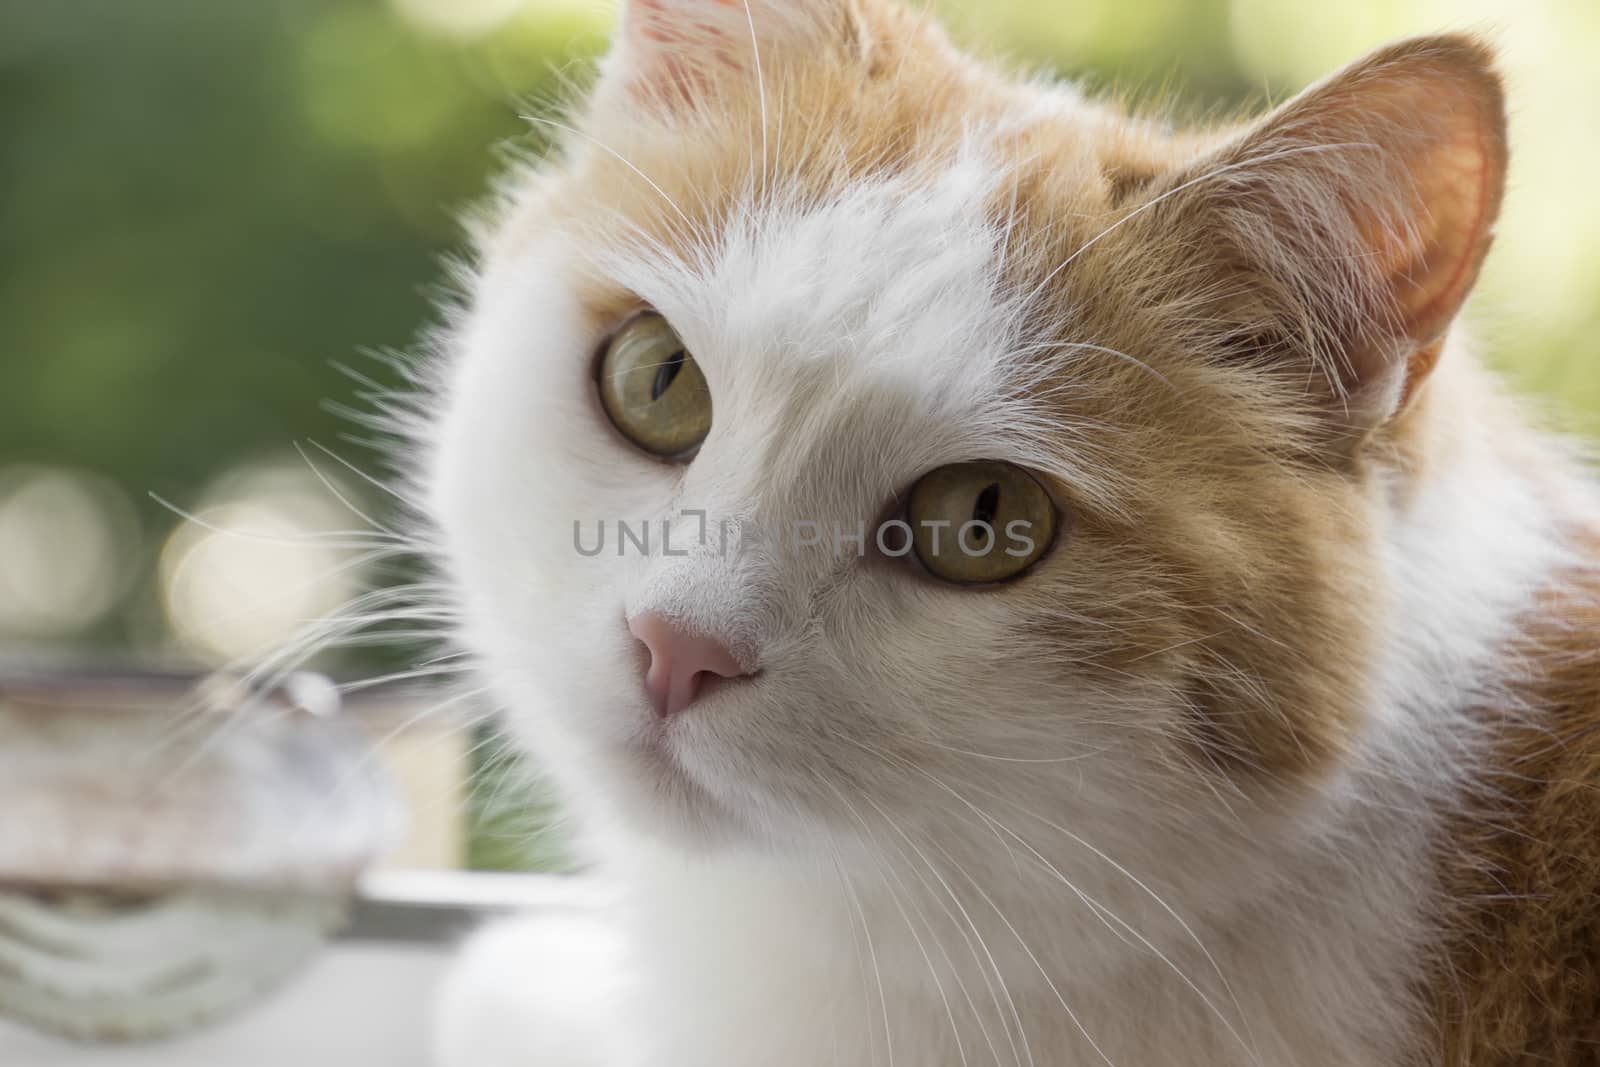 Red cat in a garden closeup view